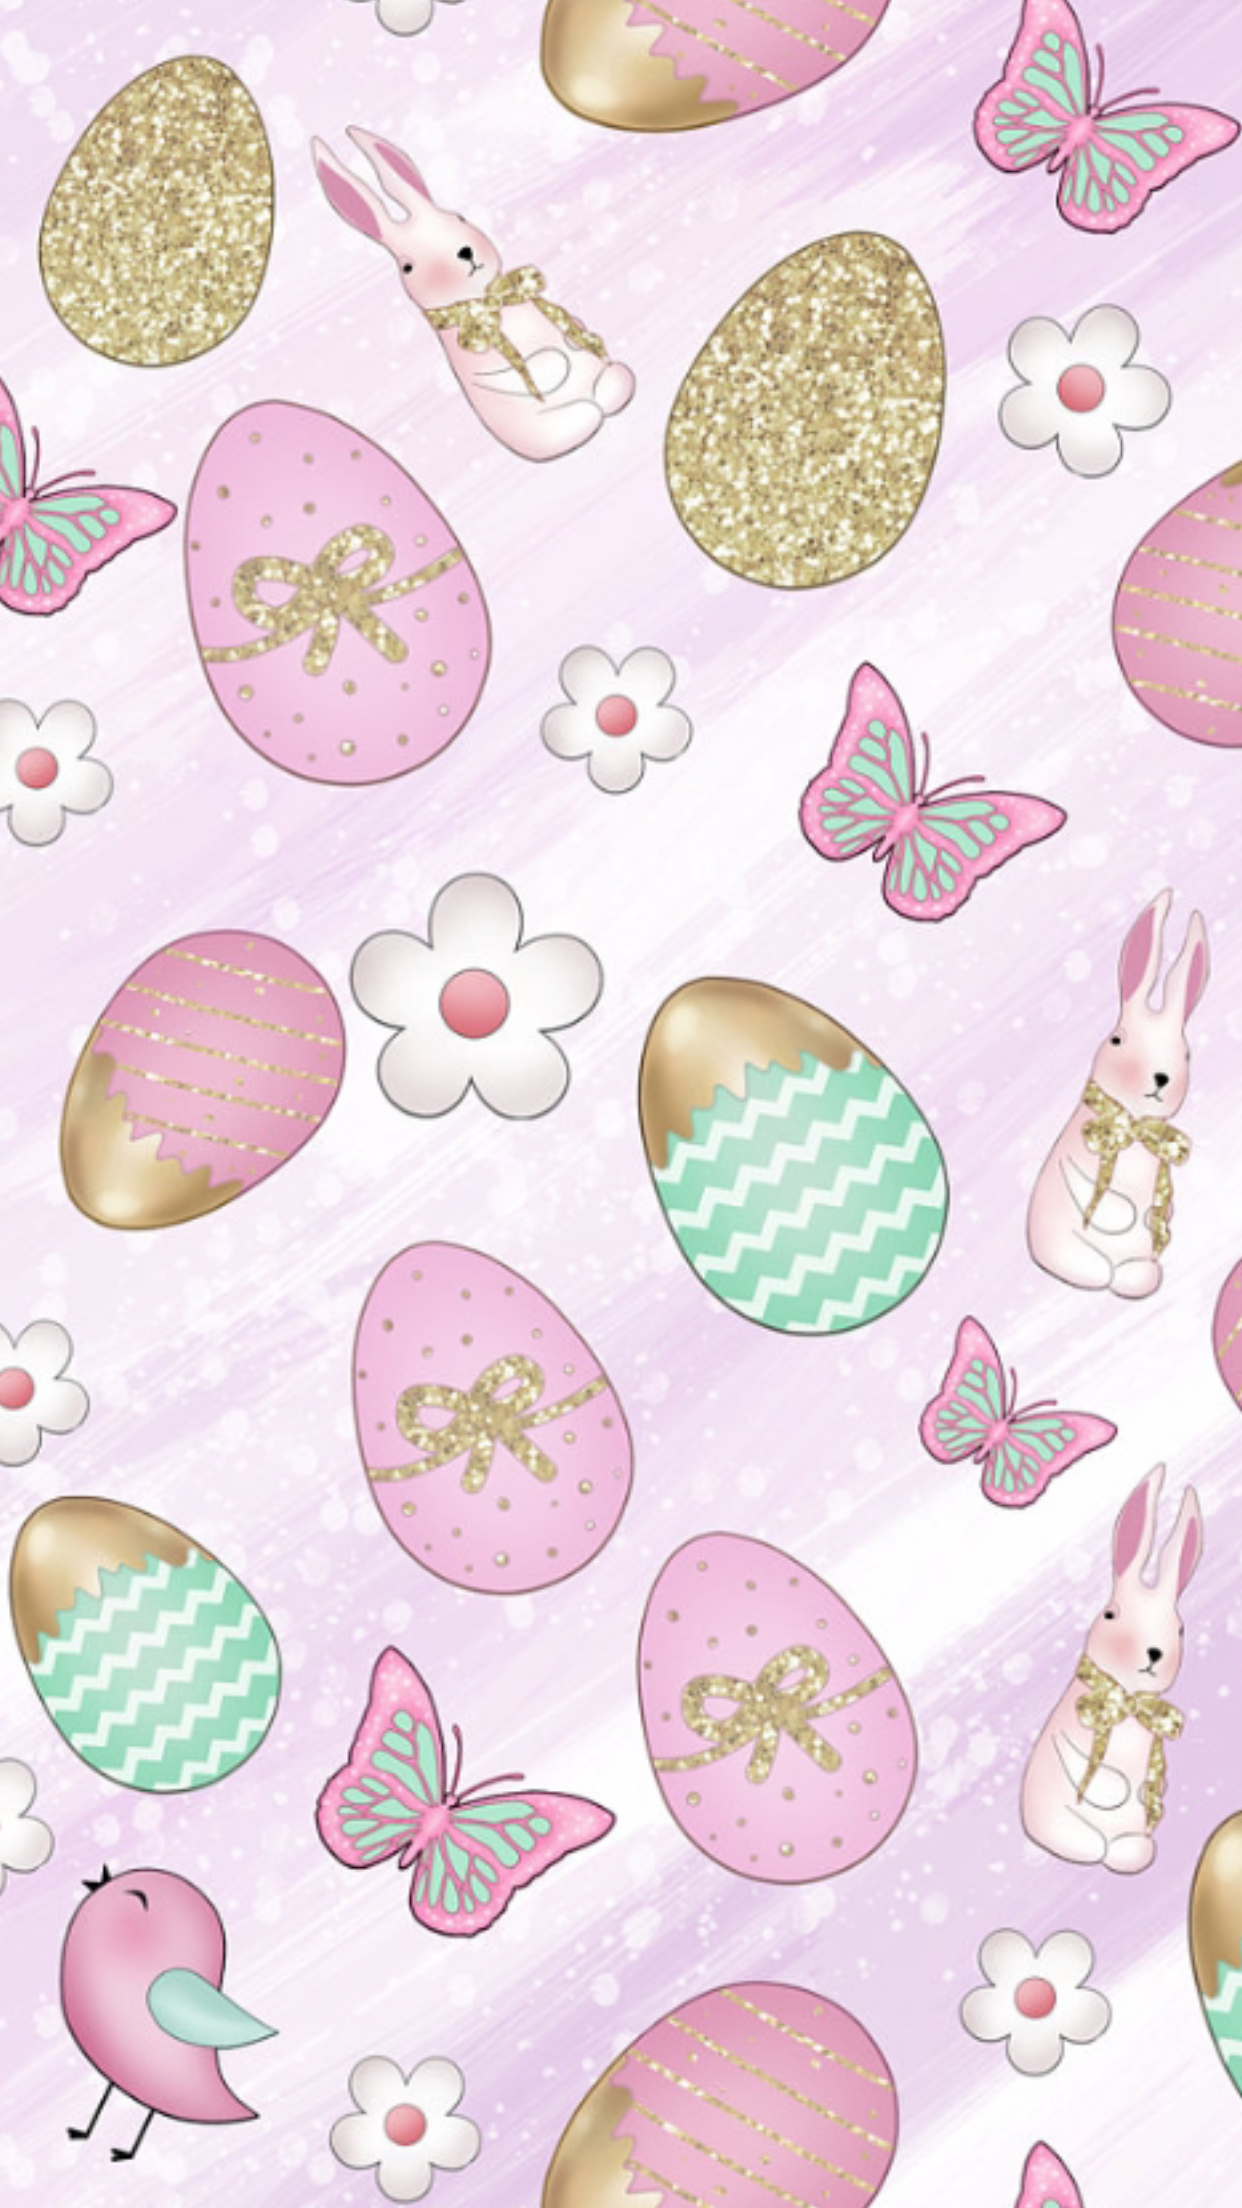 W.✿‿PHONE. Easter wallpaper, Pink easter wallpaper, Easter